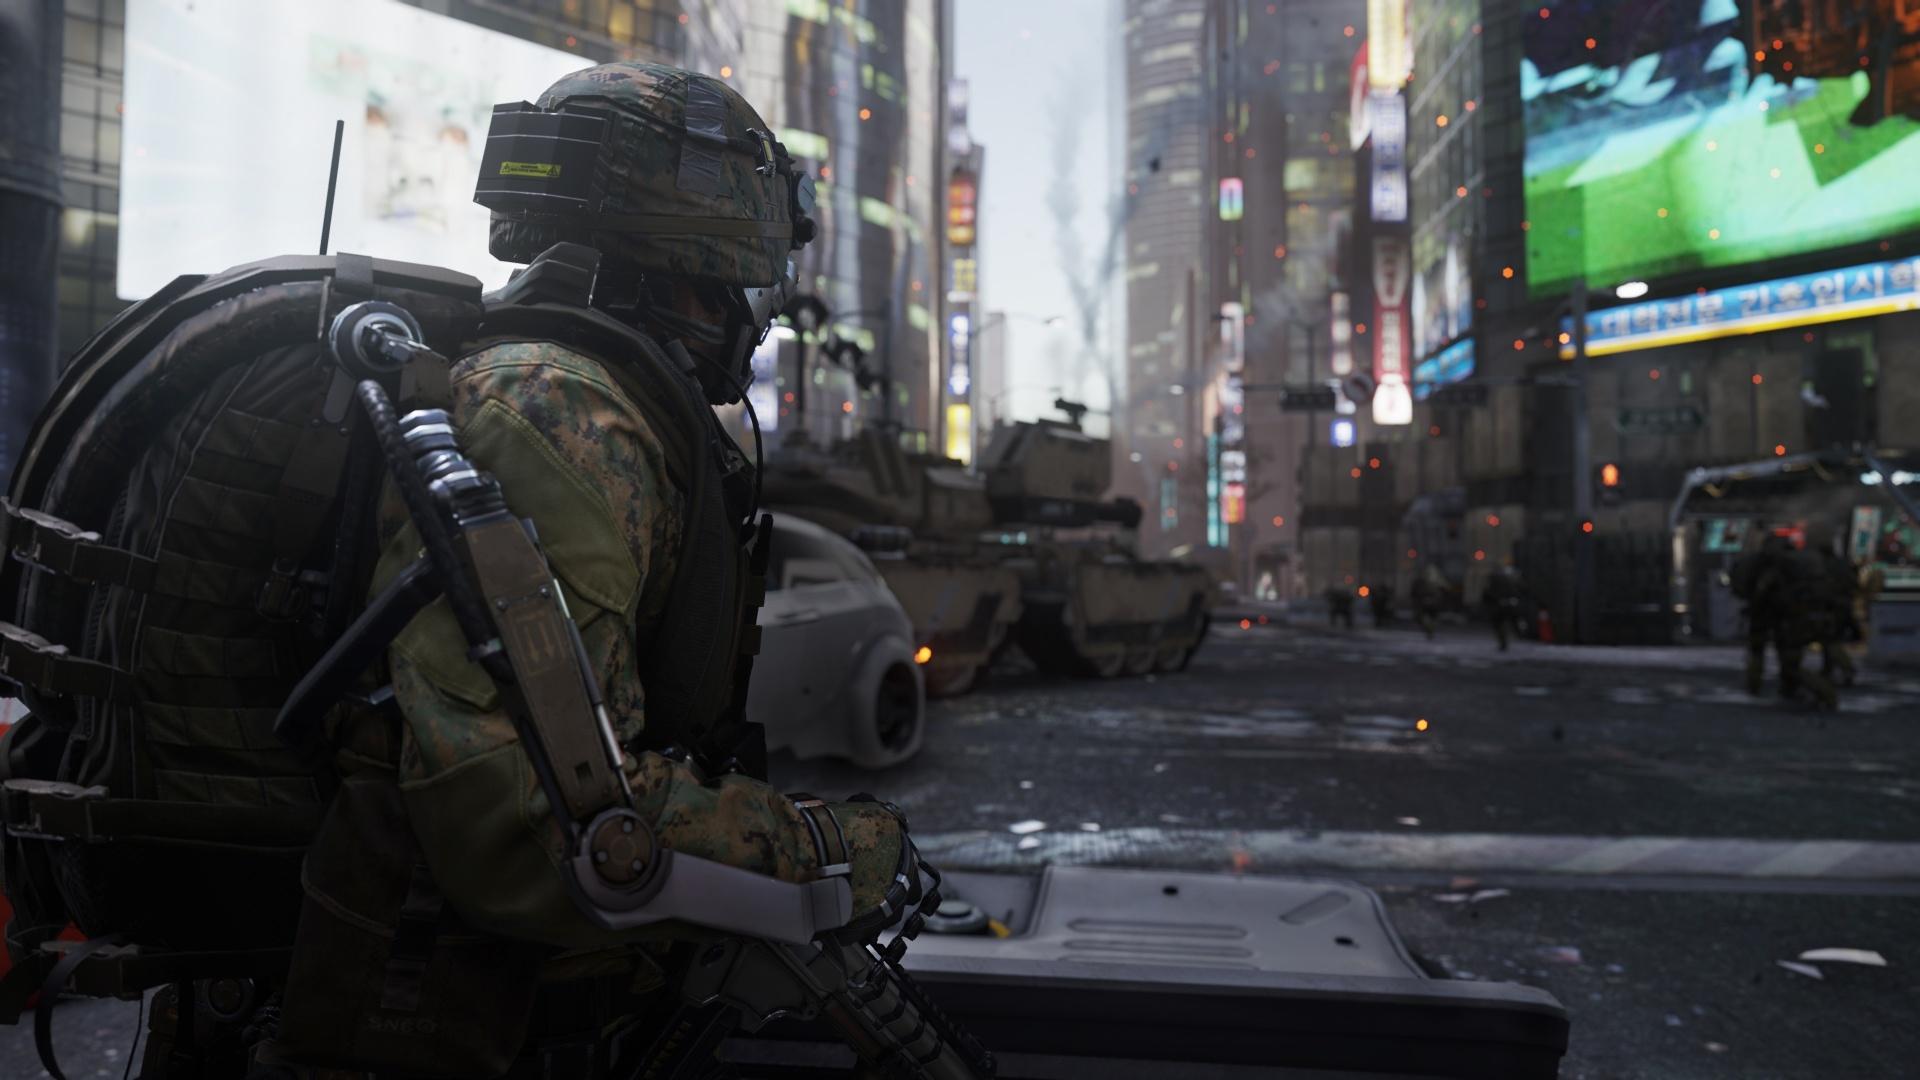 Sledgehammer Advanced Warfare Is a New Franchise Inside Call of Duty